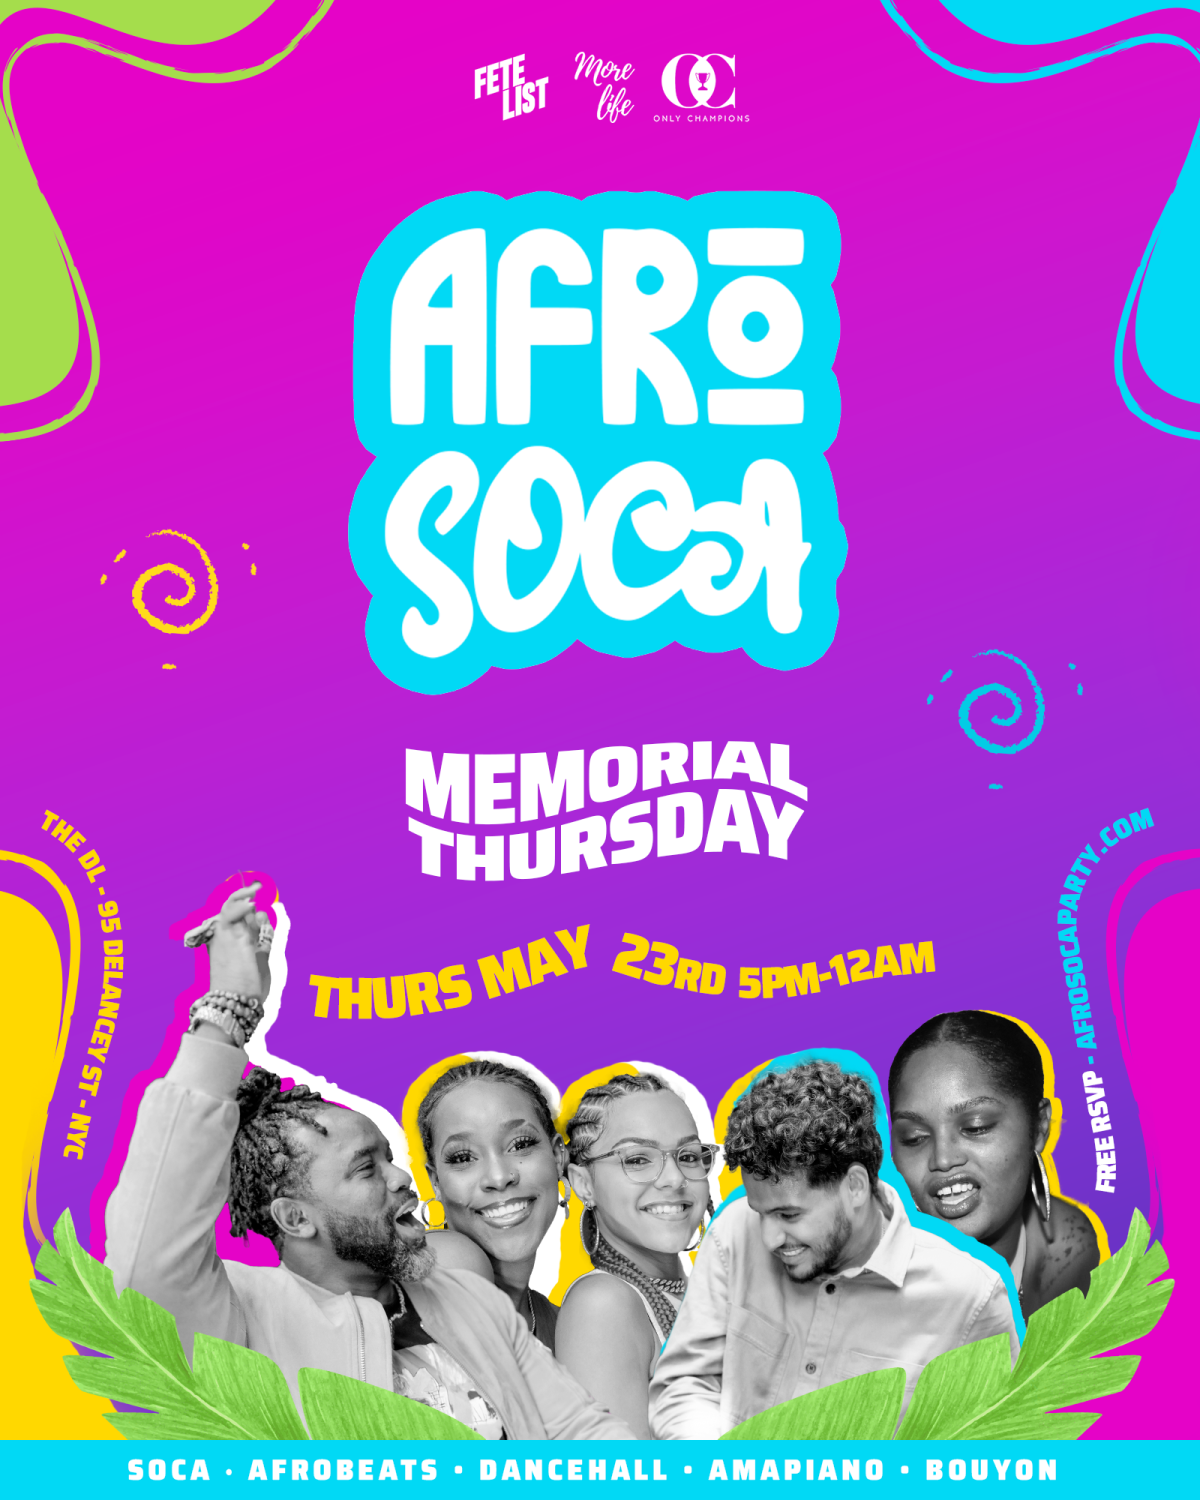 Afro Soca - Memorial Thursday flyer or graphic.